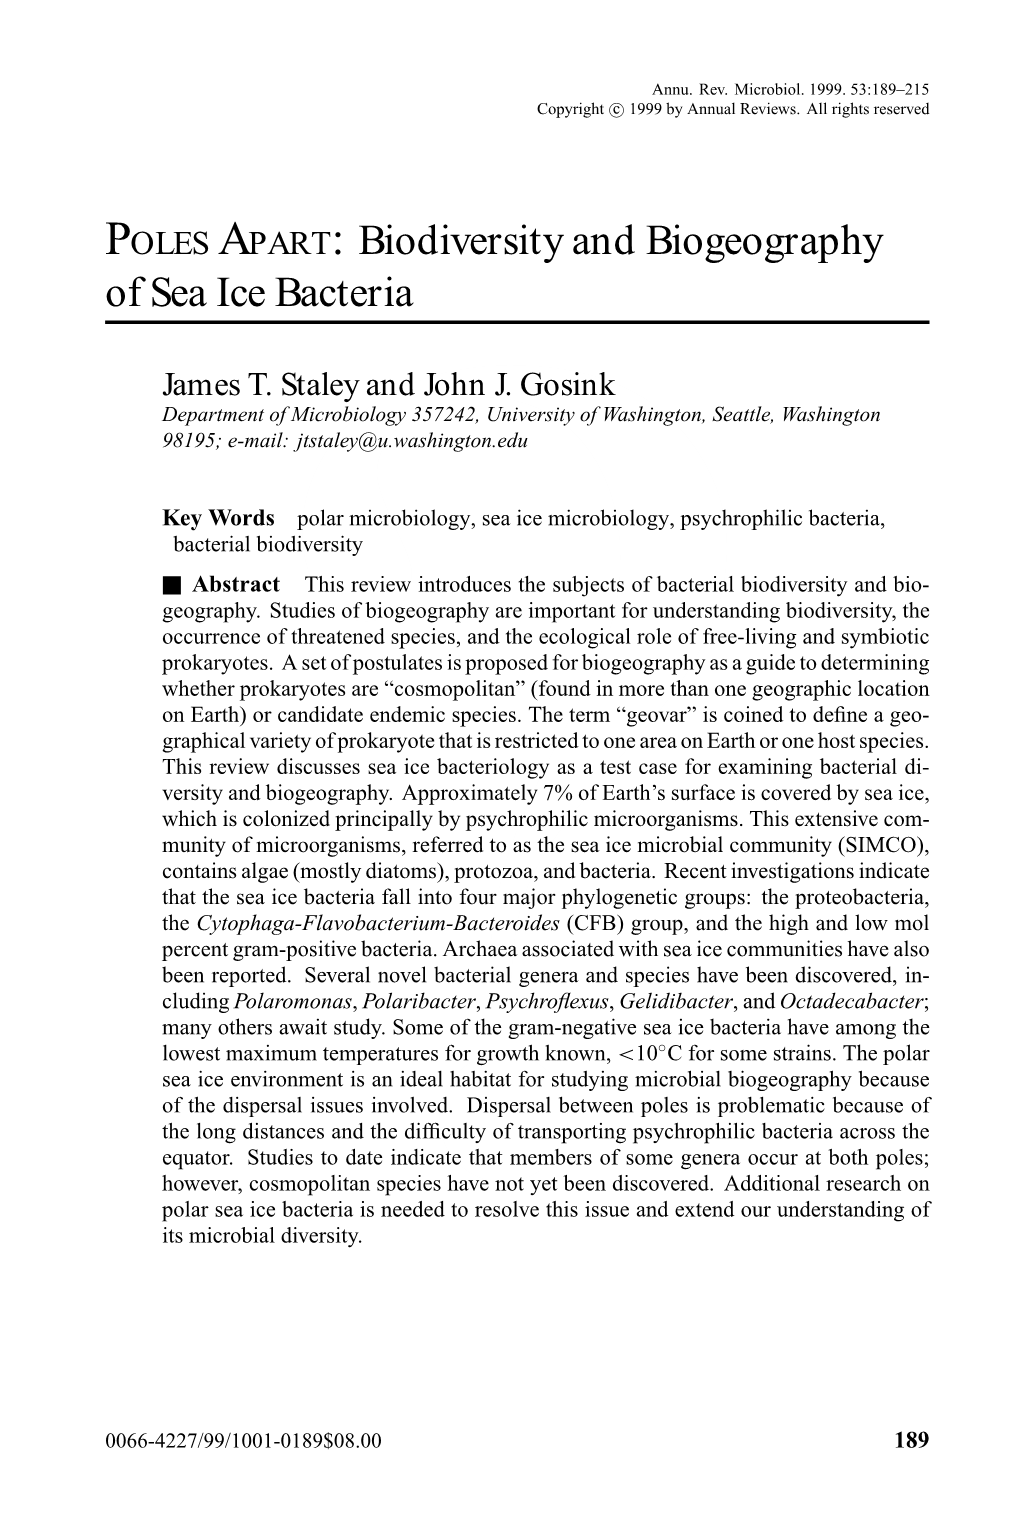 Biodiversity and Biogeography of Sea Ice Bacteria